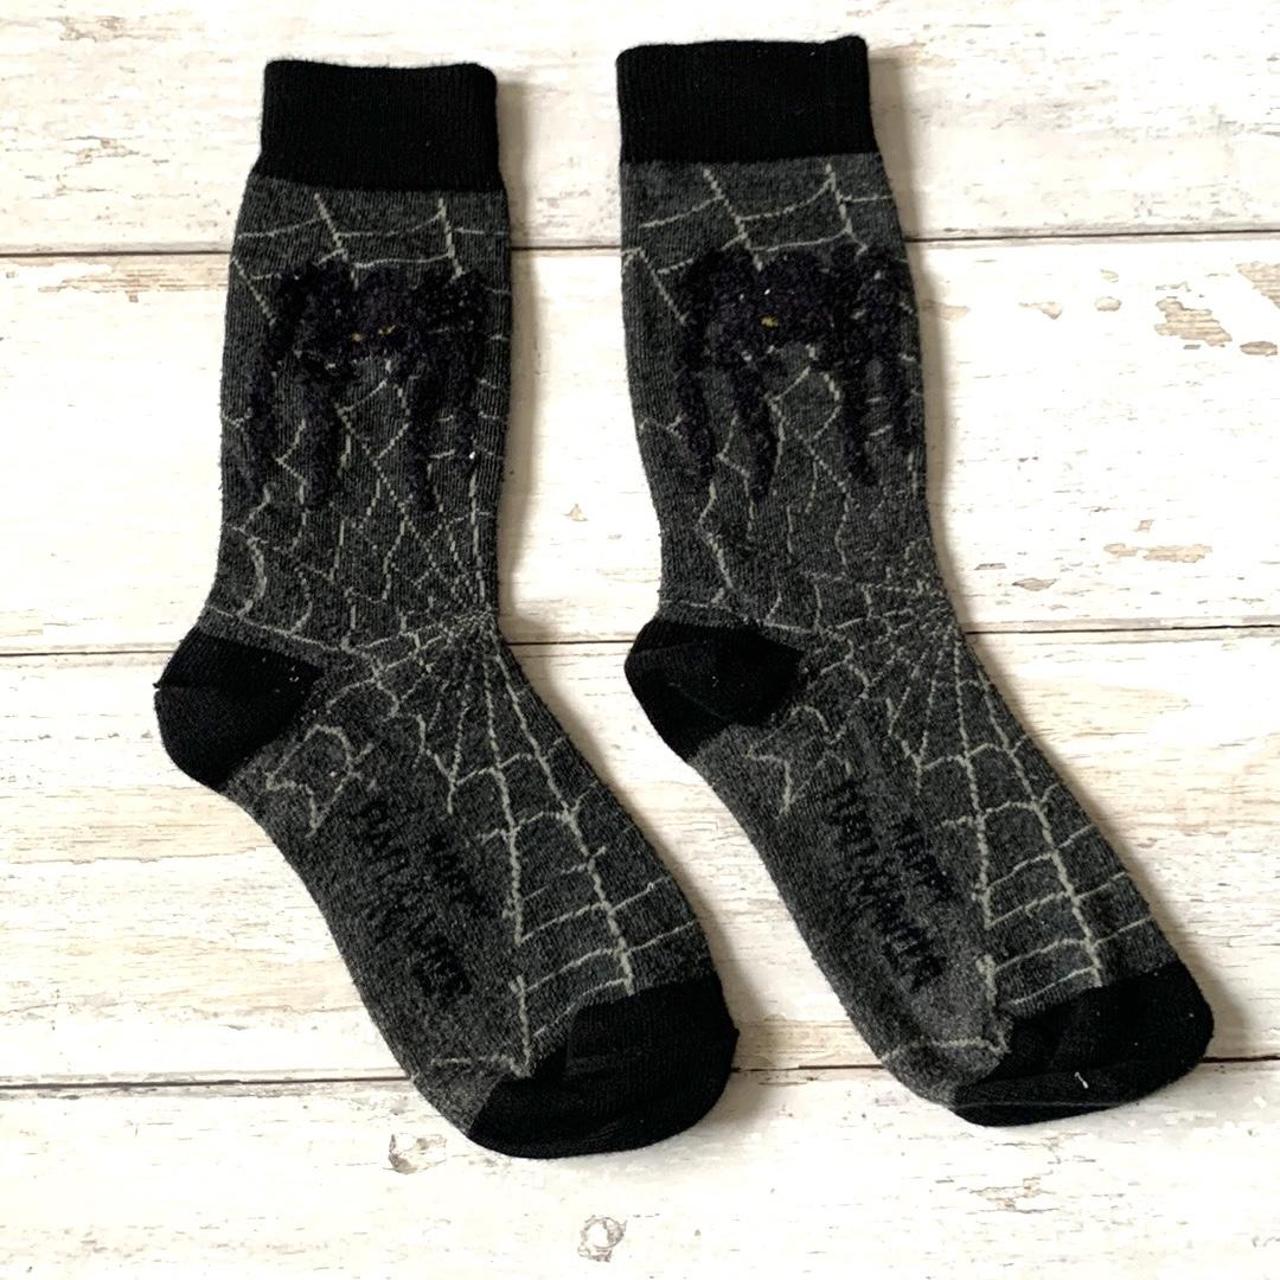 BasShu Men's Black and Grey Socks